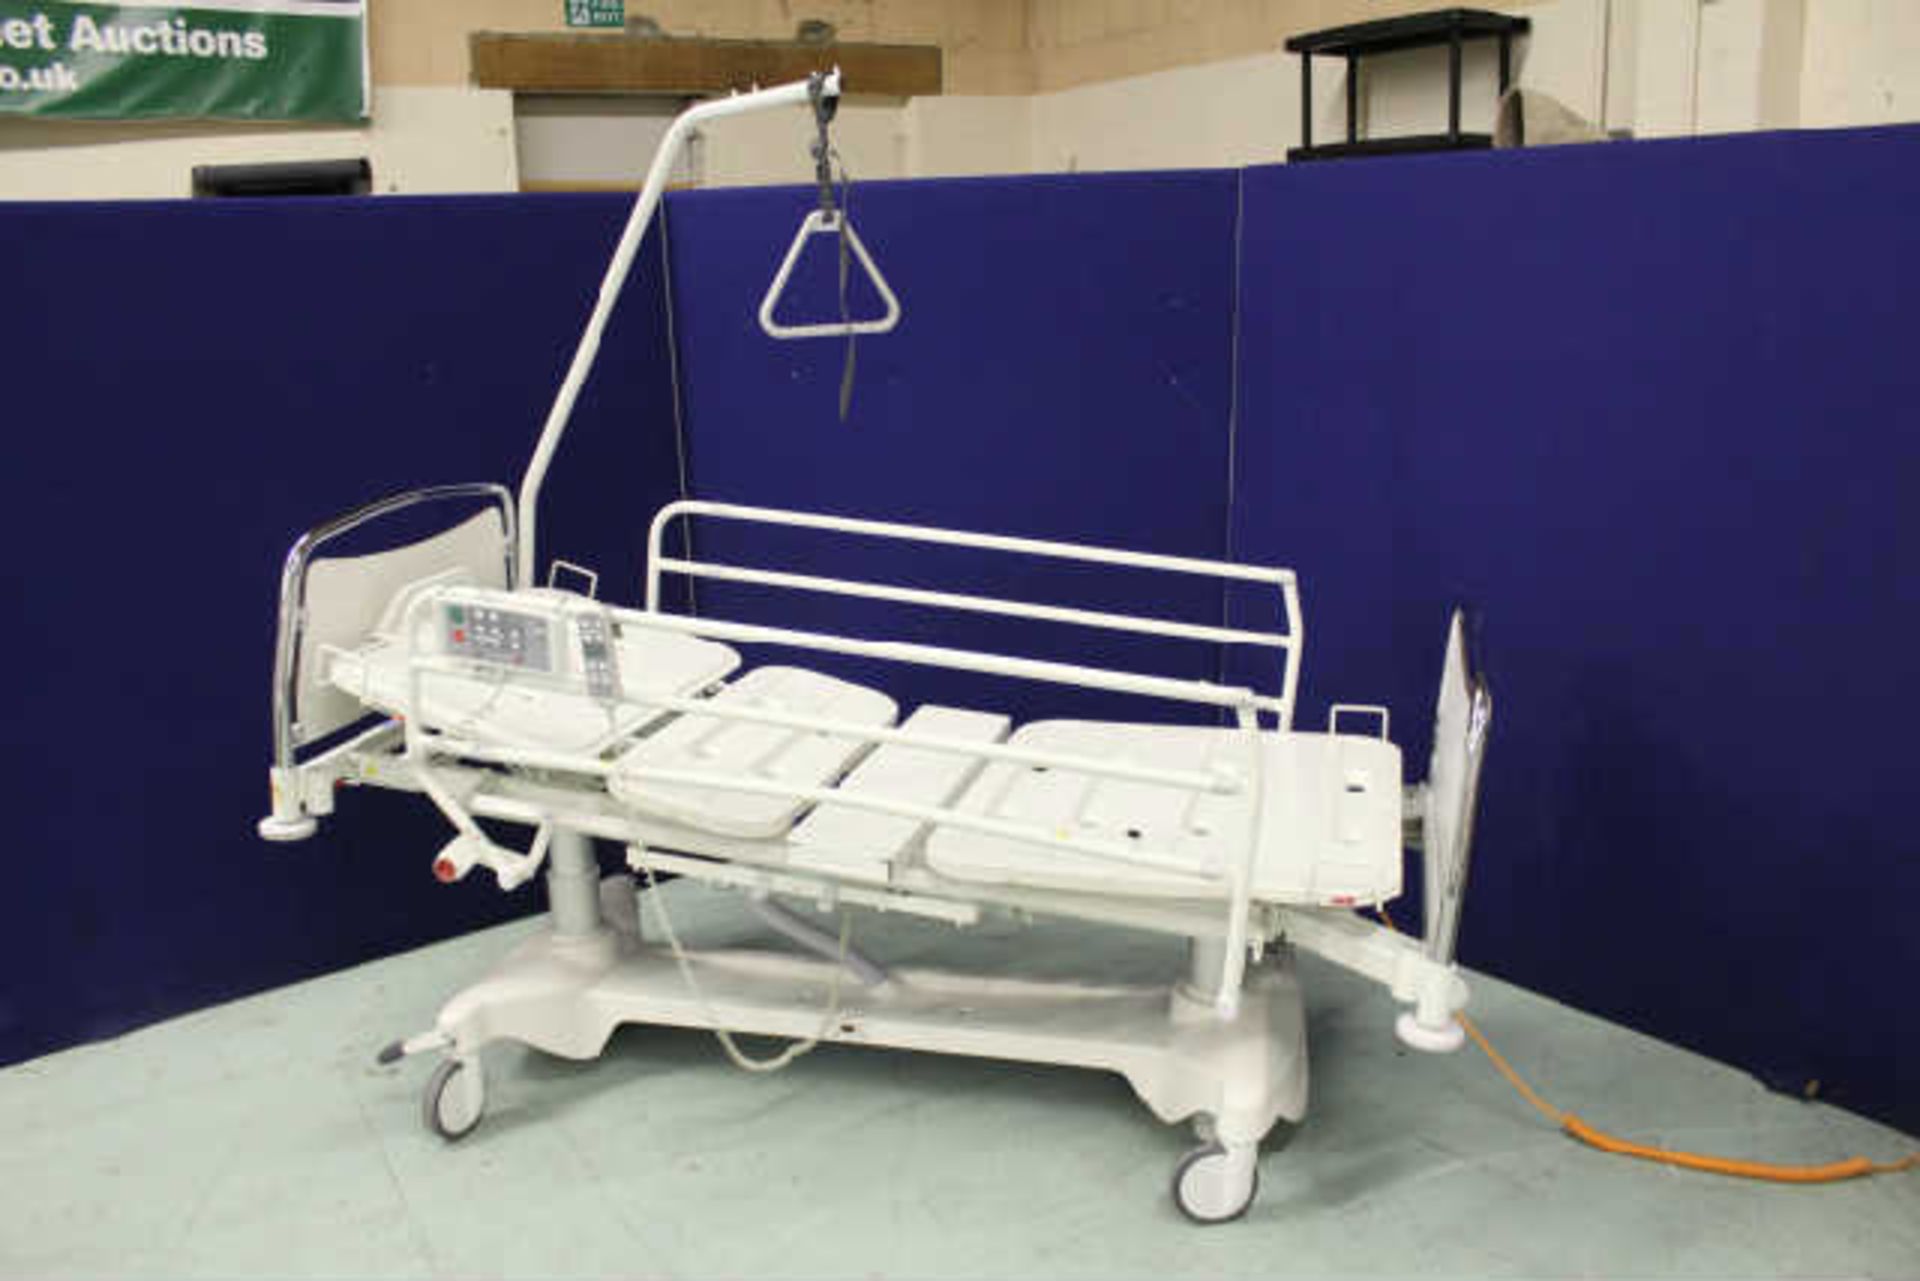 ELEGANZA STANDARD 3000 CPR ADJUSTABLE ELECTRICAL HOSPITAL BED WITH STANDARD 110V INDUSTRIAL PLUG AND - Image 2 of 2